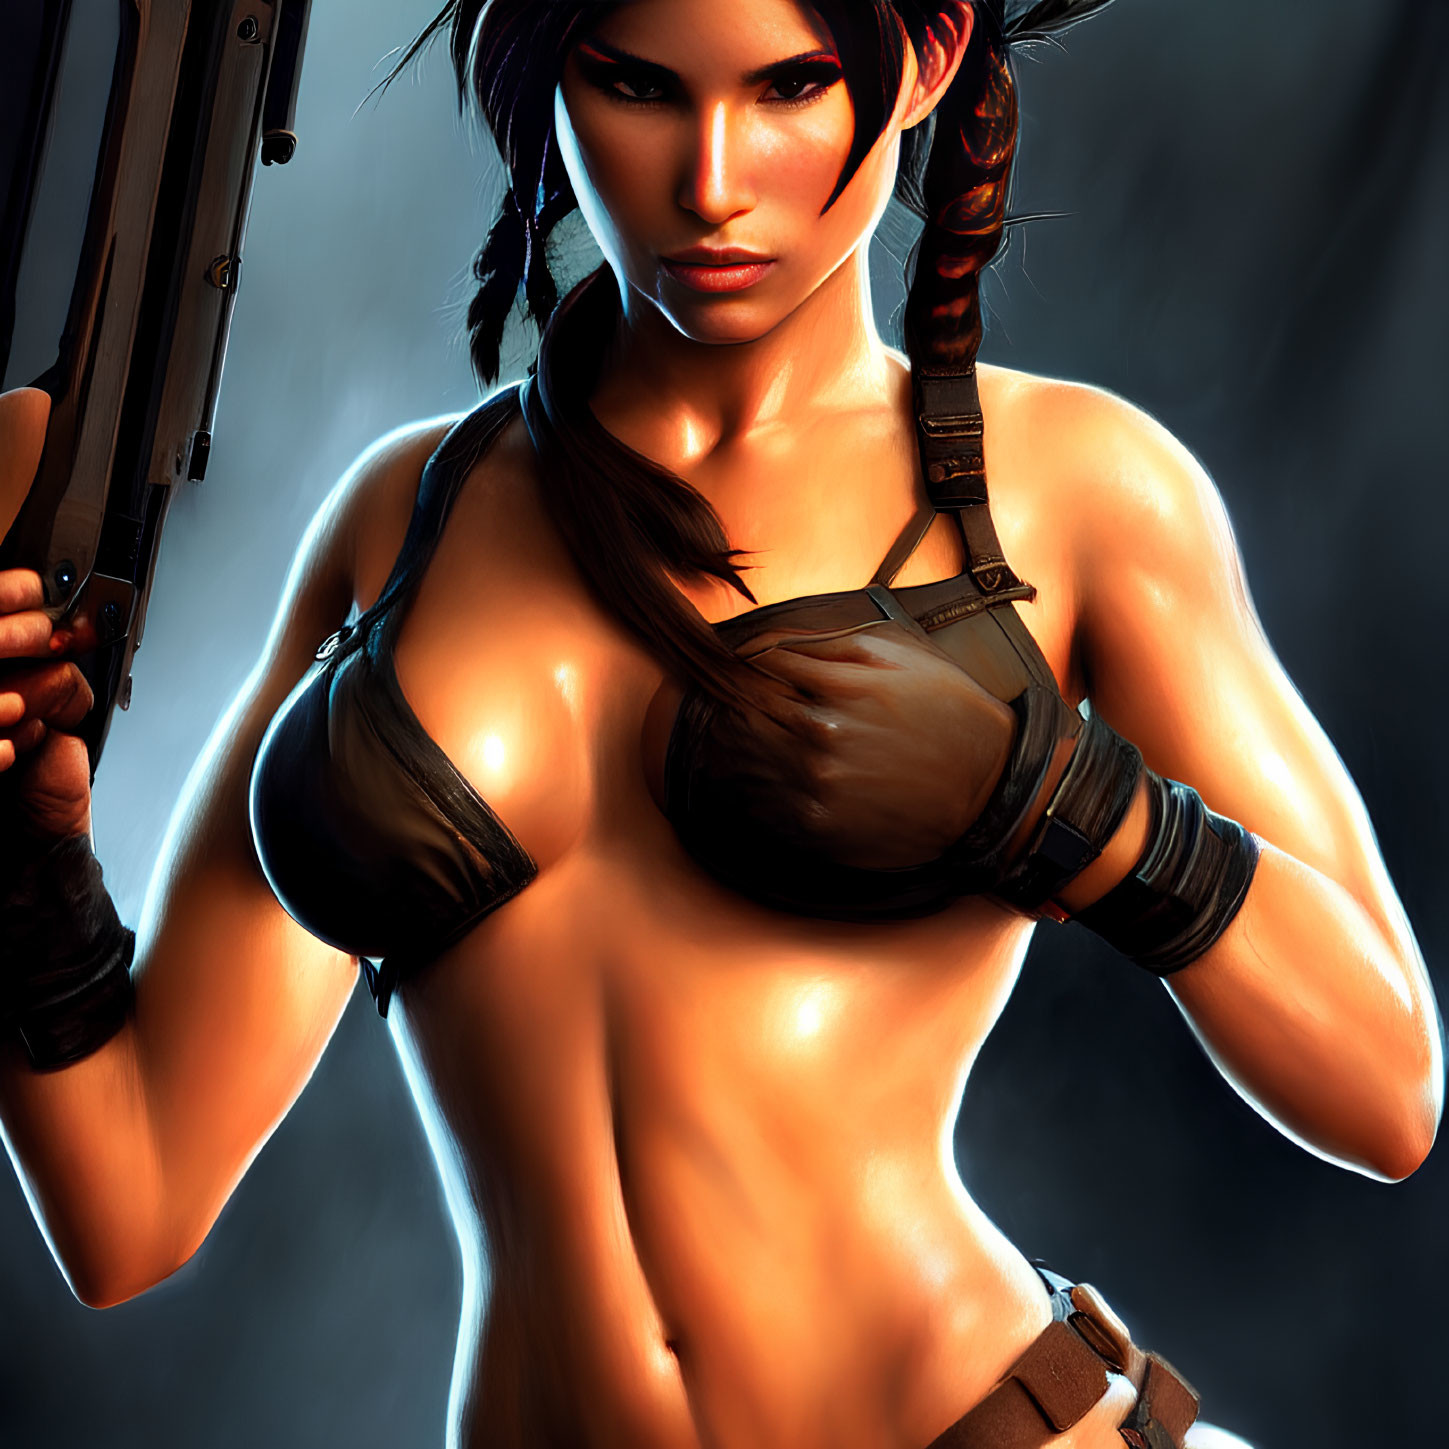 Muscular female character in dark setting with weapon and black bikini top